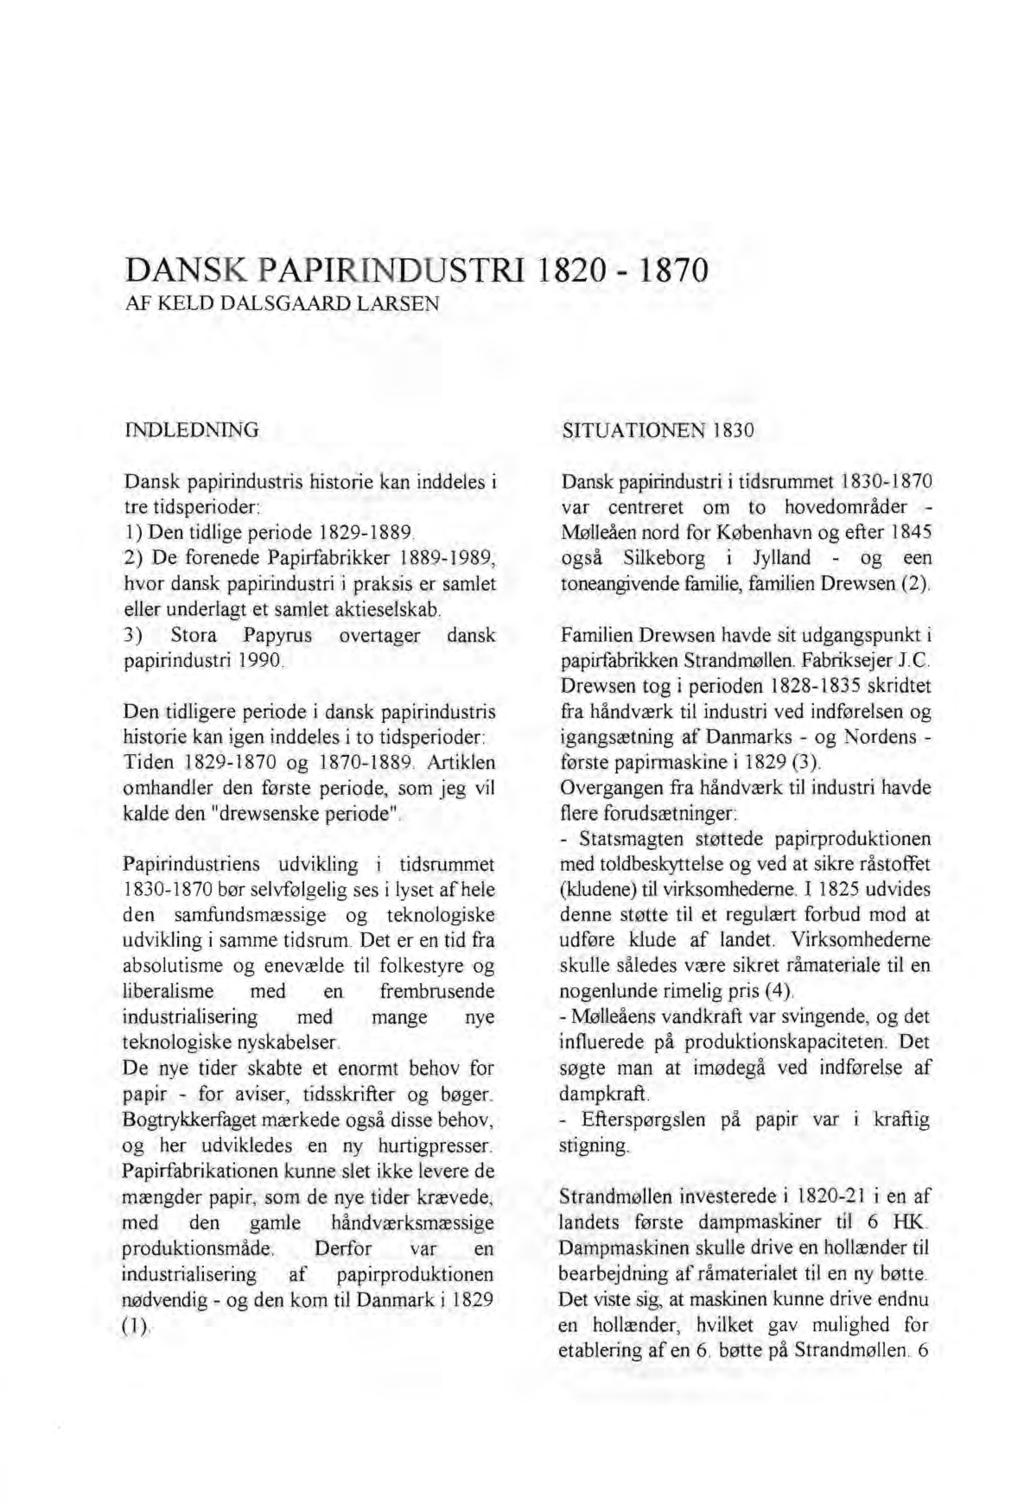 DANSK PAPIRINDUSTRI P APIRlNDUSTRI 1820-1870 AF KELD DALSGAARD LARSEN INDLEDNING Dansk papirindustris historie kan inddeles i tre tidsperioder: 1) Den tidlige periode 1829-1889.